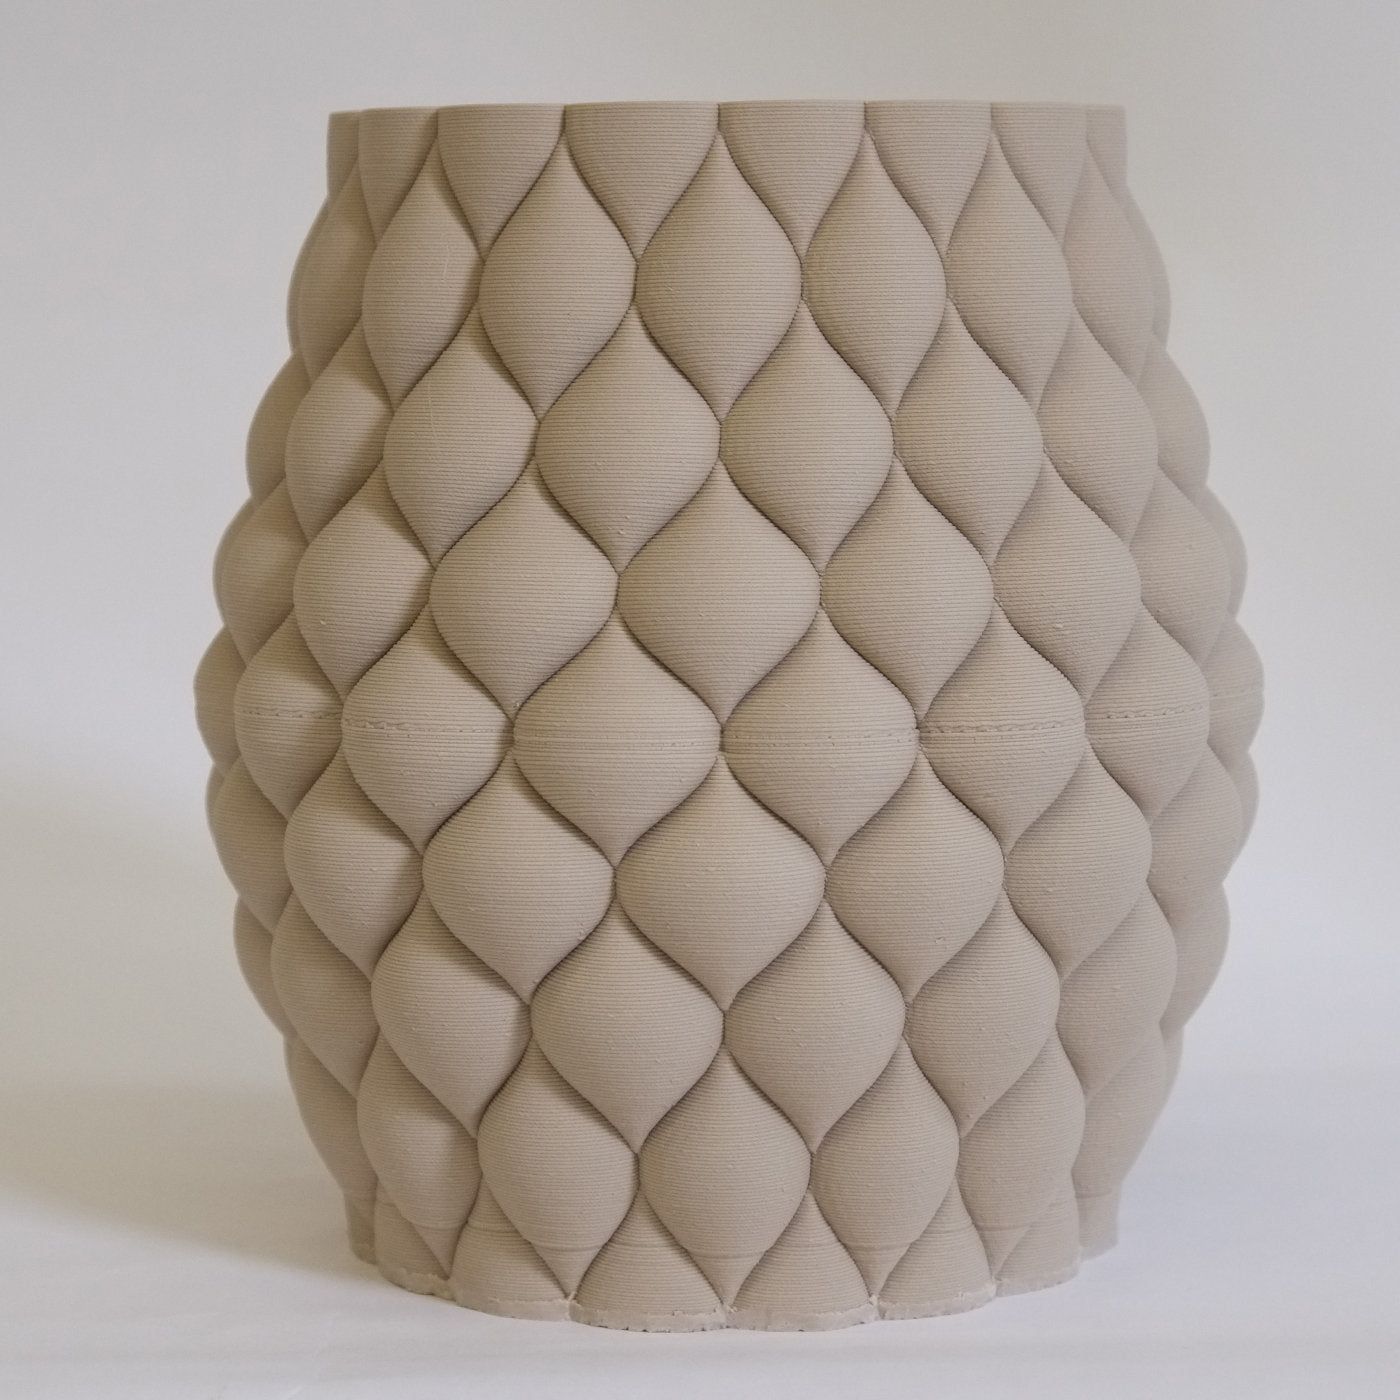 India Raw Beige Vase #2 - Alternative view 2